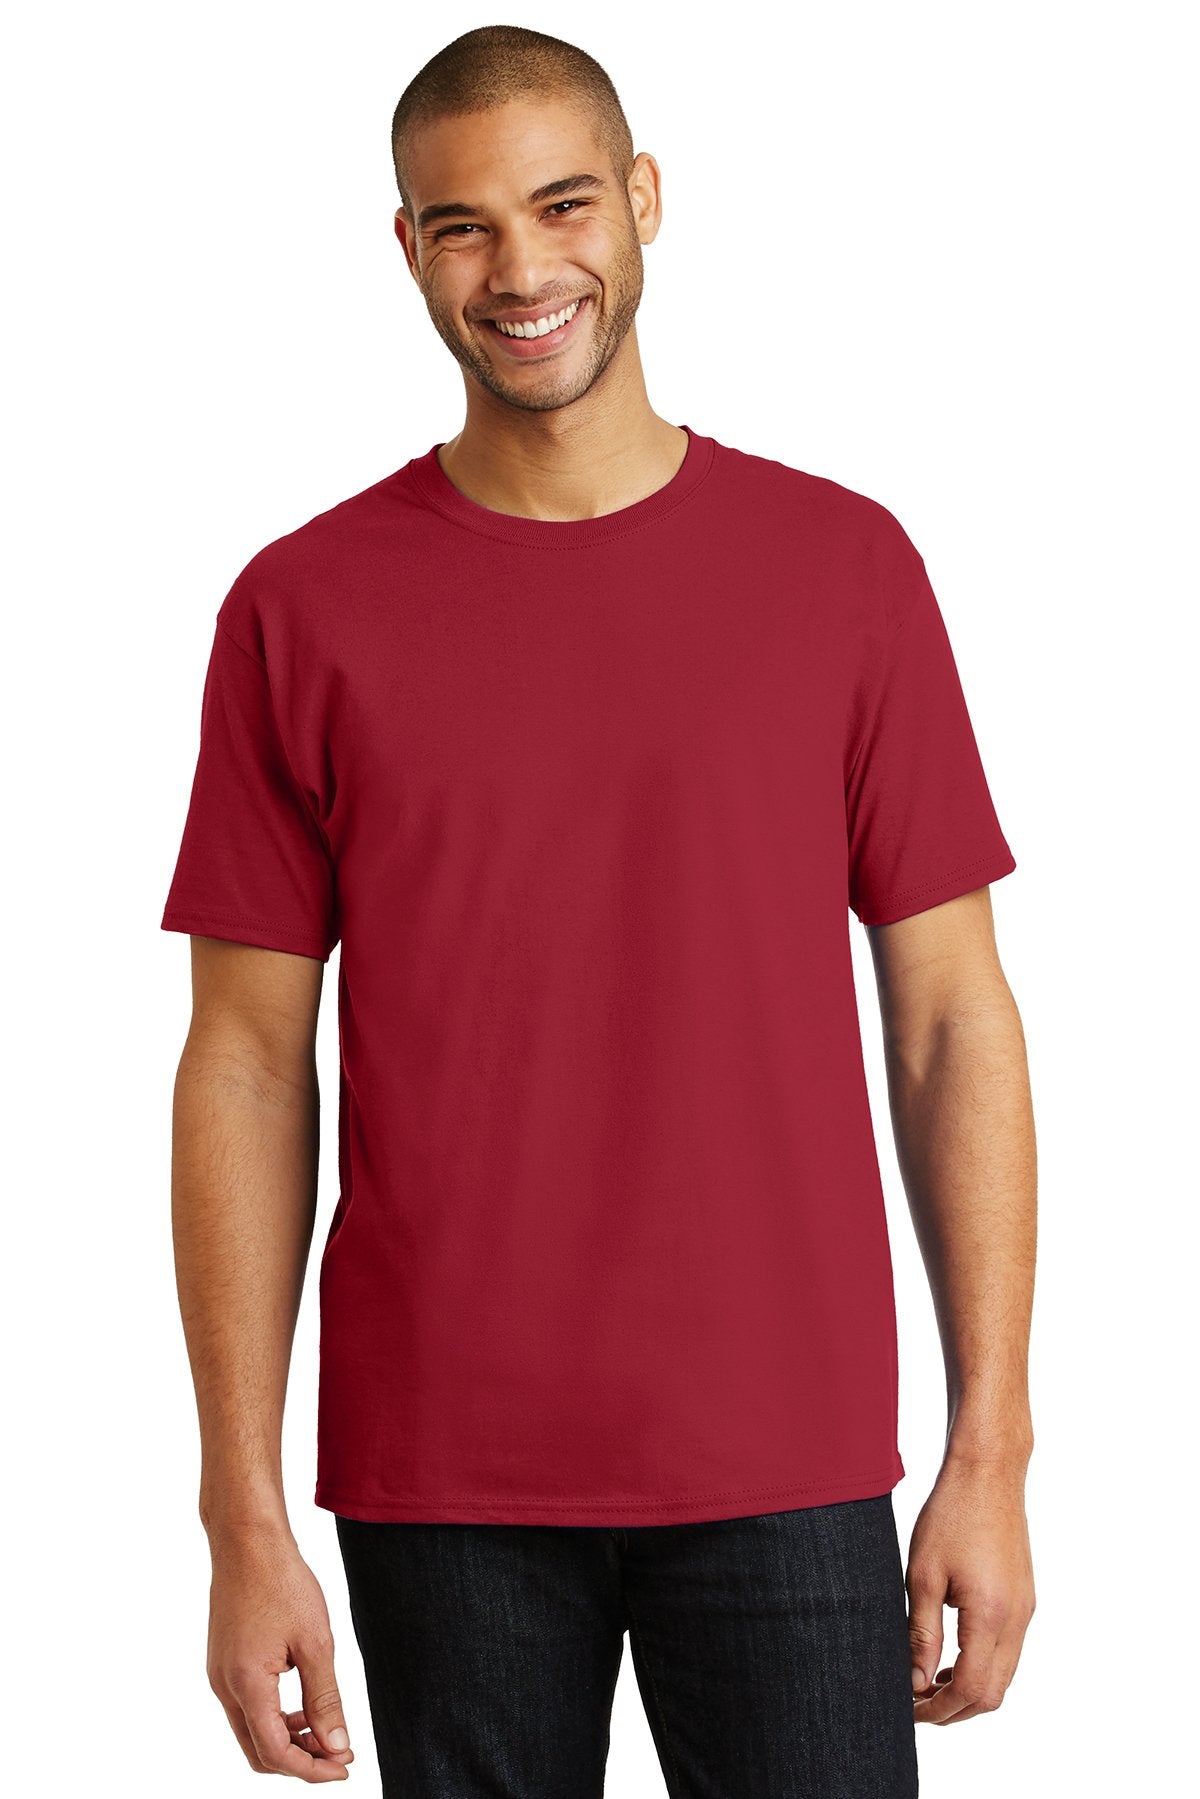 hanes tagless cotton t shirt 5250 deep red